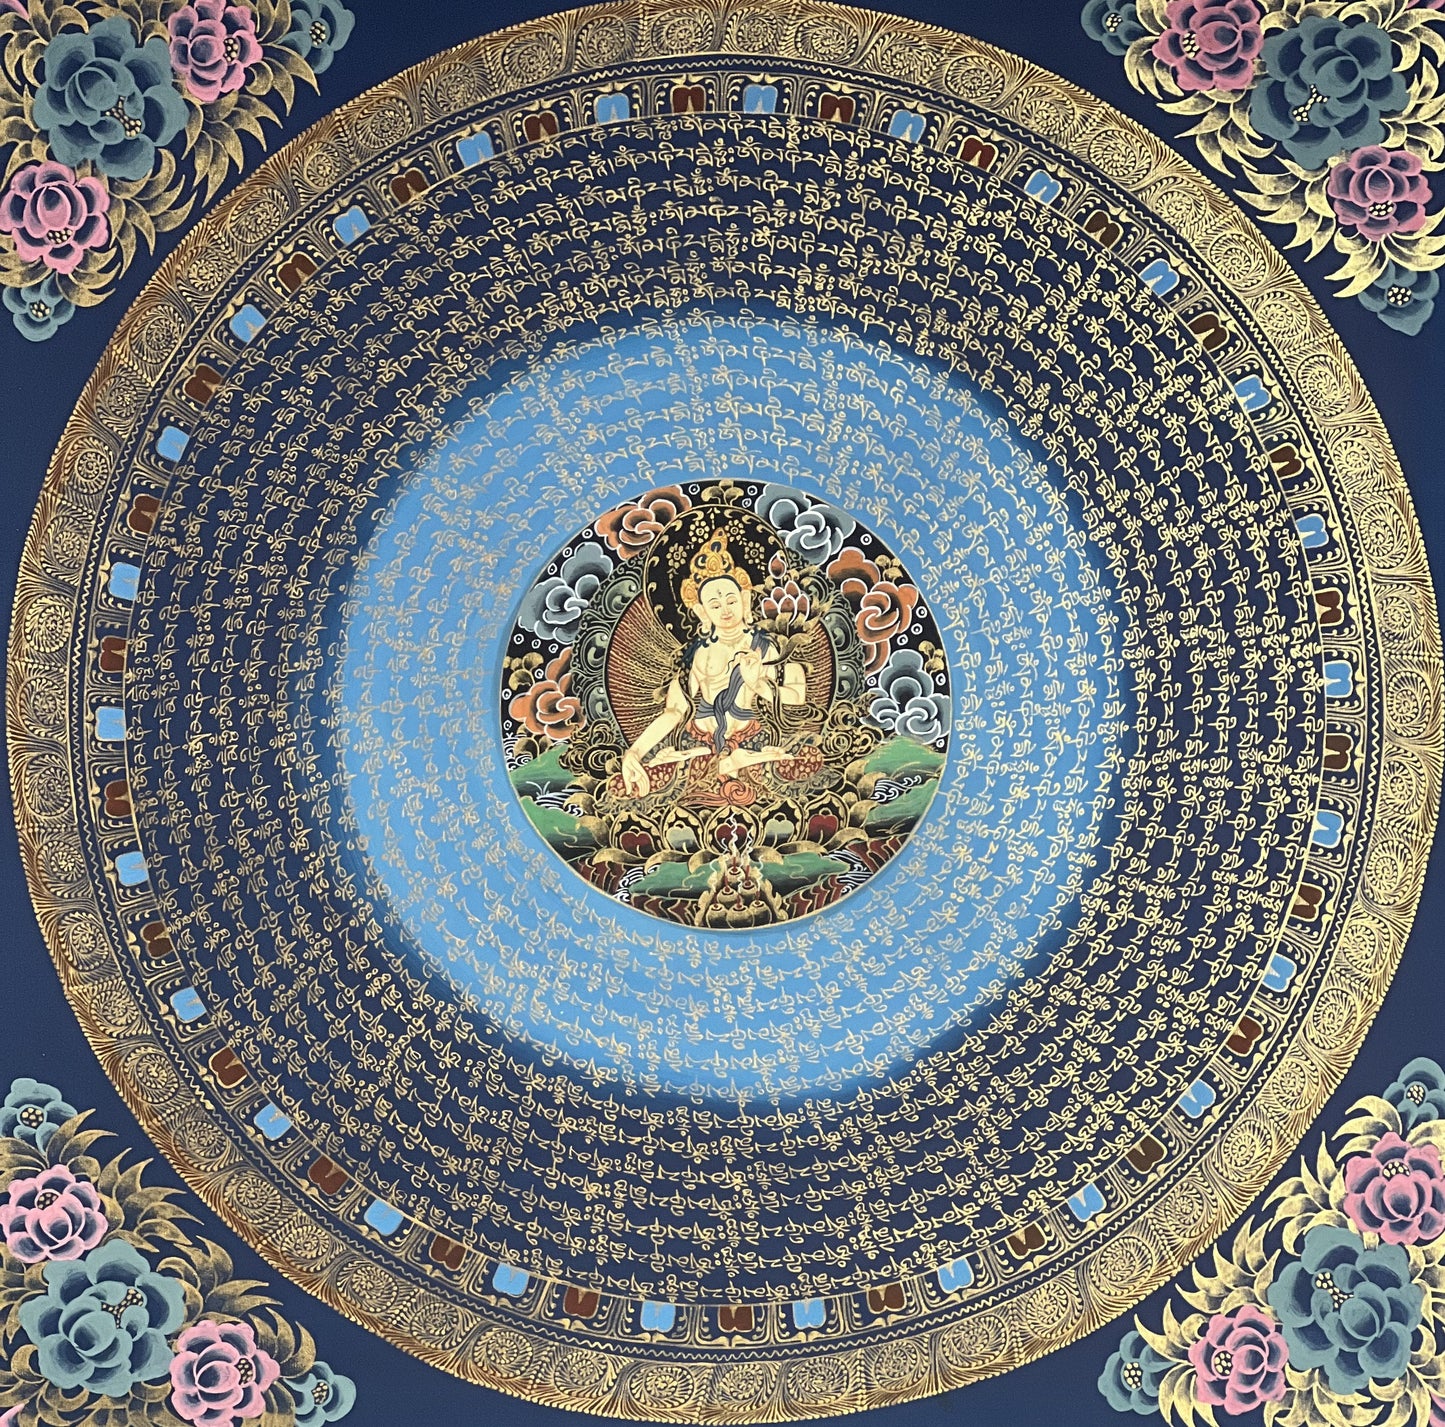 White Tara Om Mantra Mandala Tibetan Thangka Painting, Original Hand-Painted Art for Meditation, Healing, Home Decor